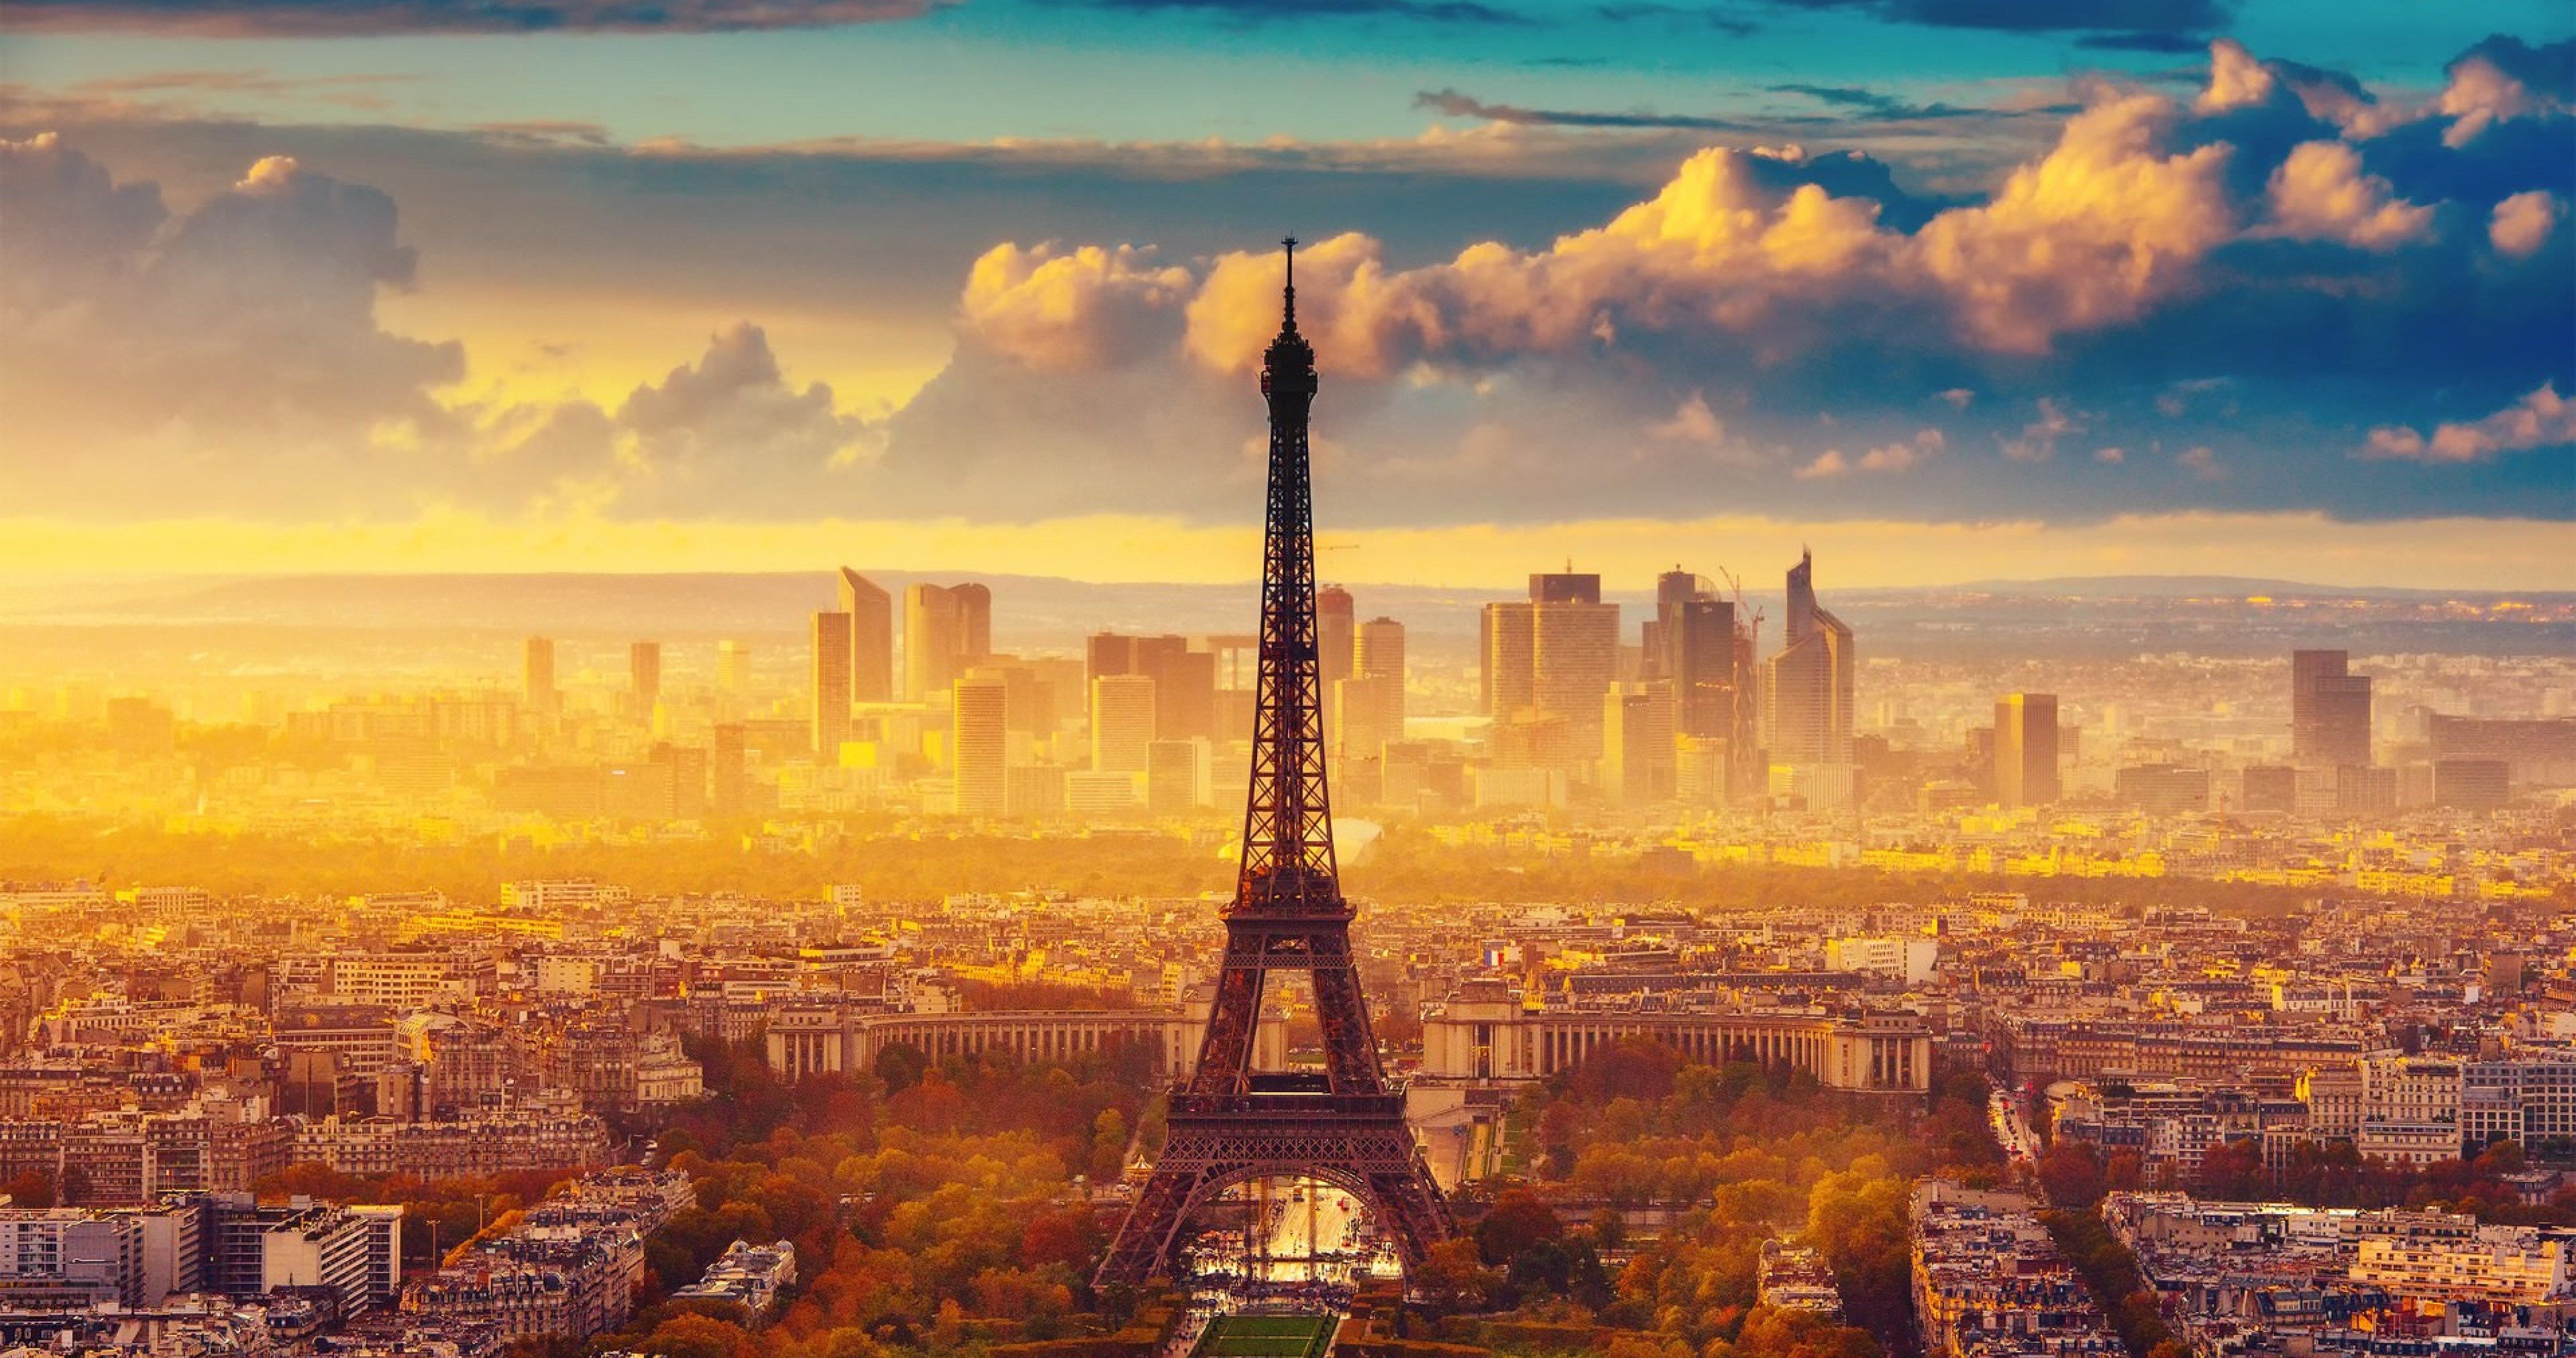 France The City Of Paris Eiffel Tower 4k Ultra HD Wallpaper